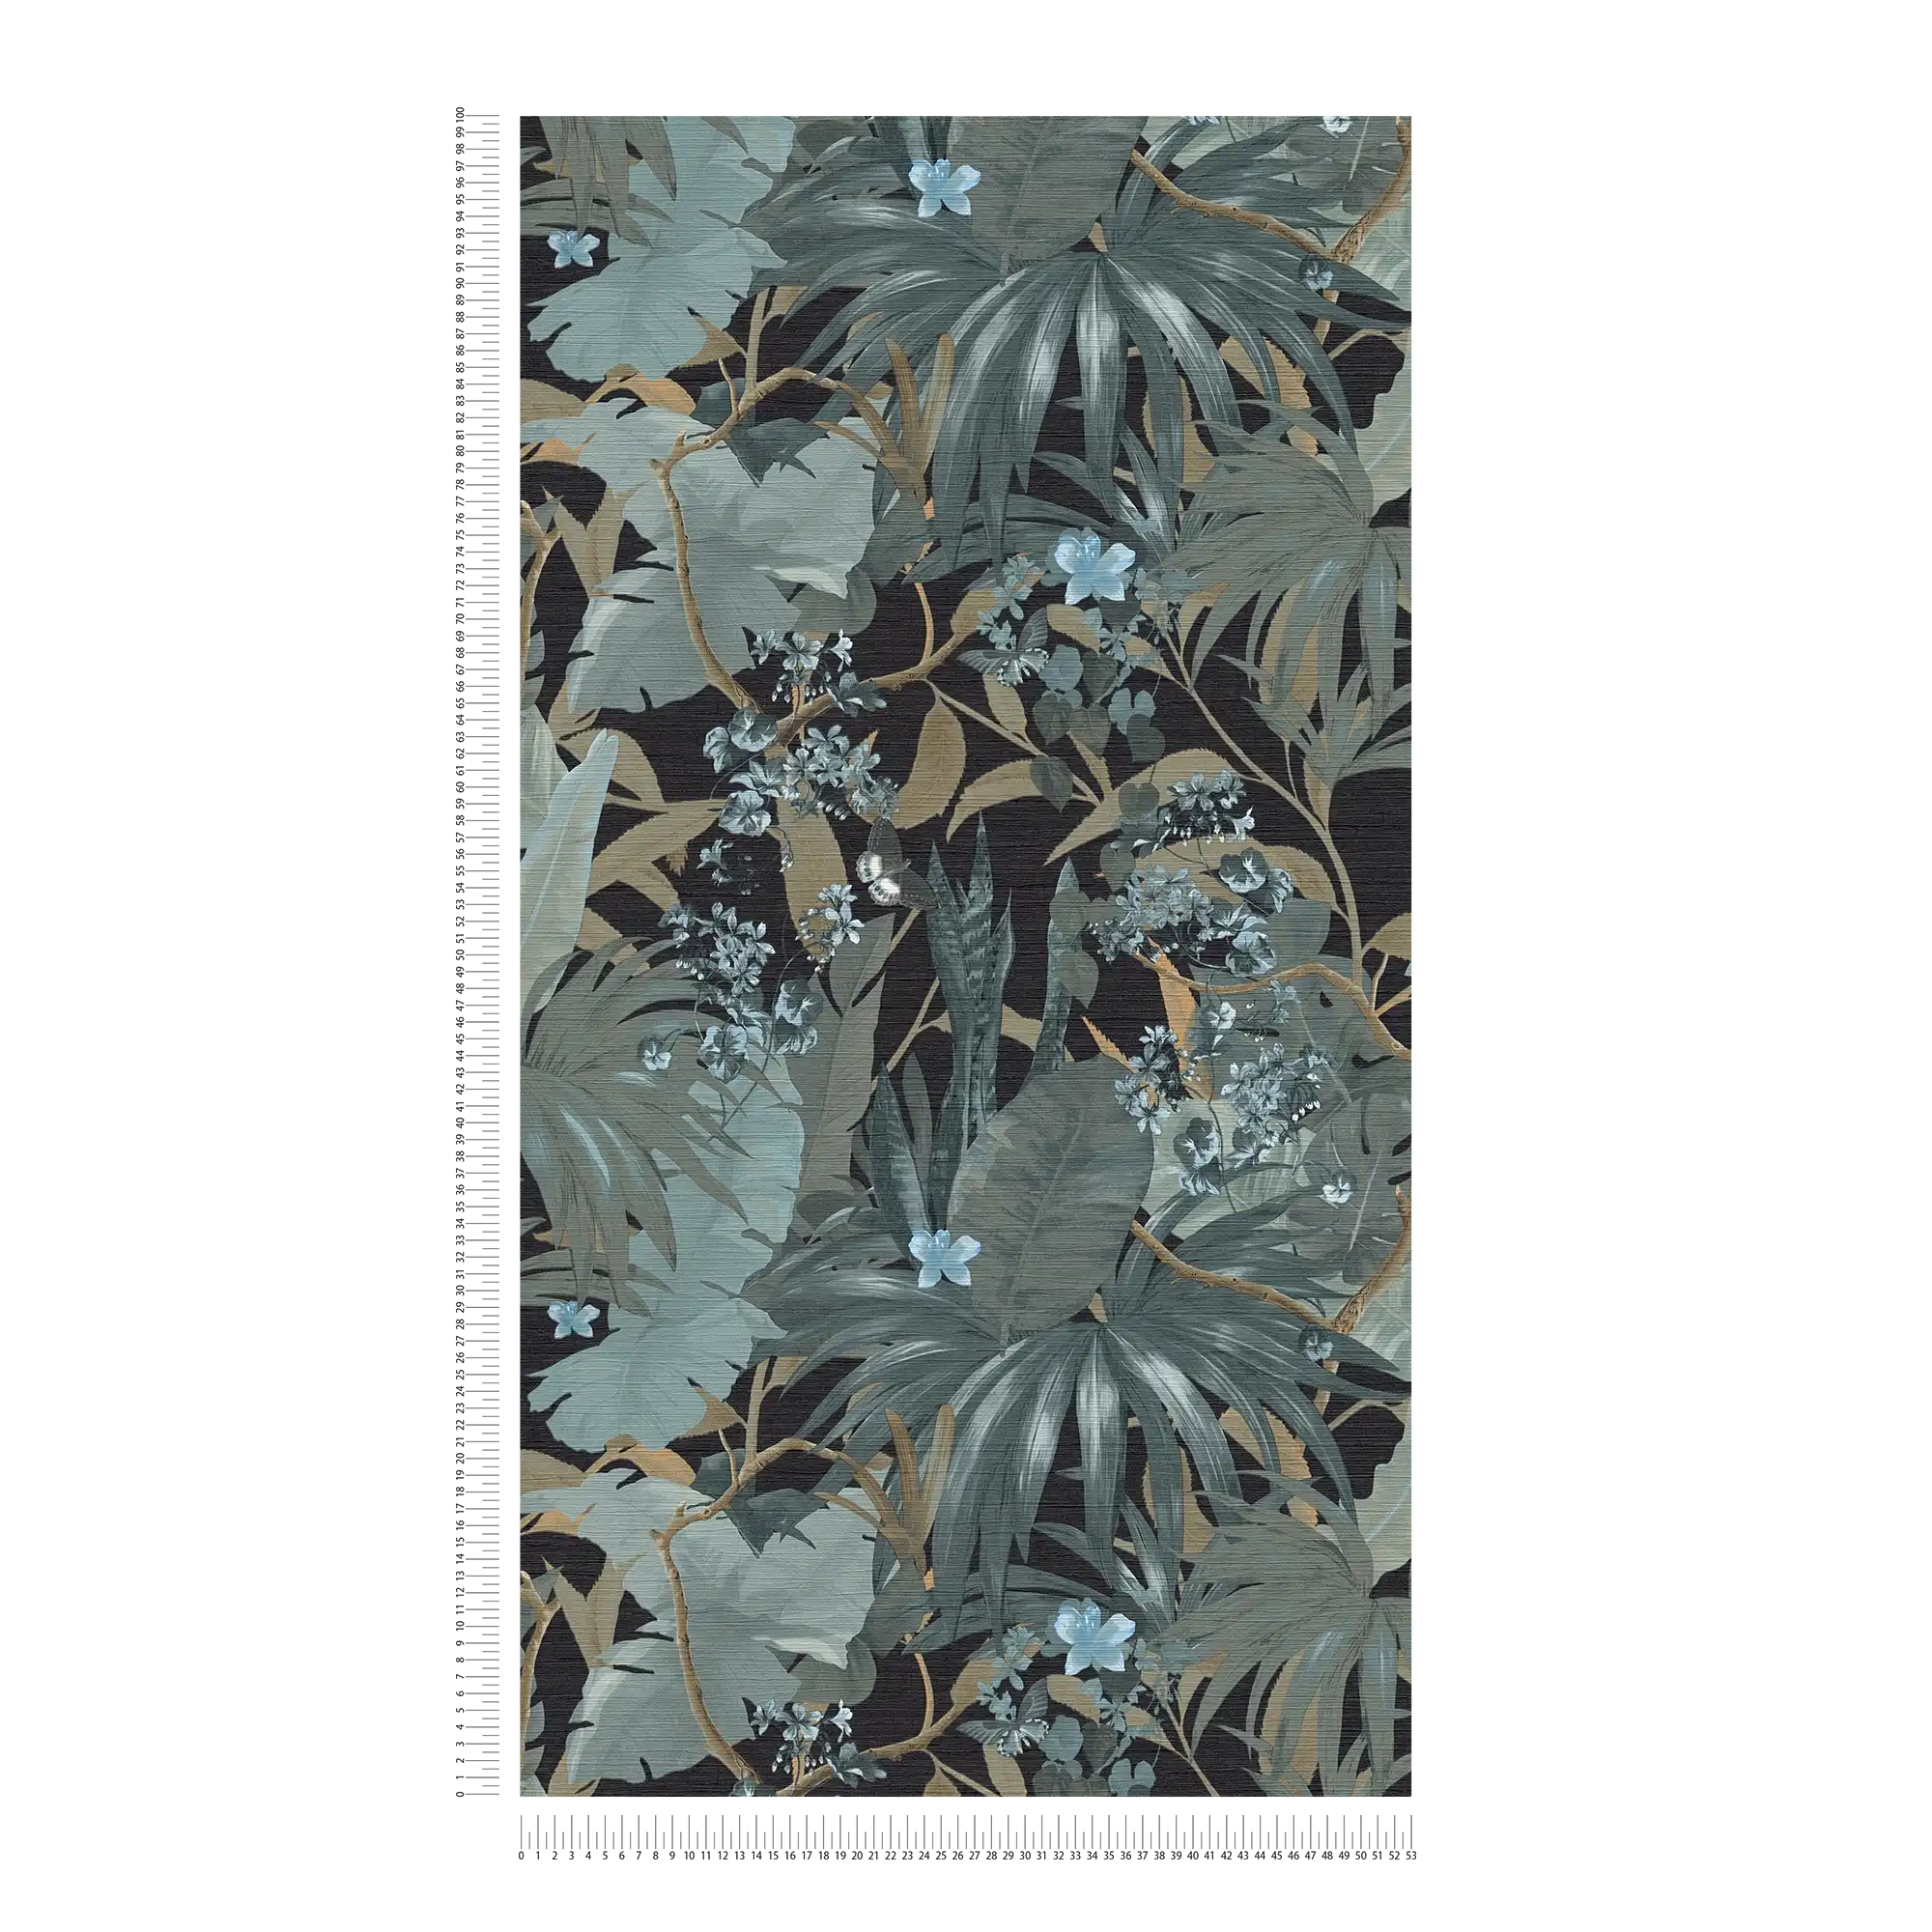             Papier peint Jungle Design avec motif de feuilles - gris, vert
        